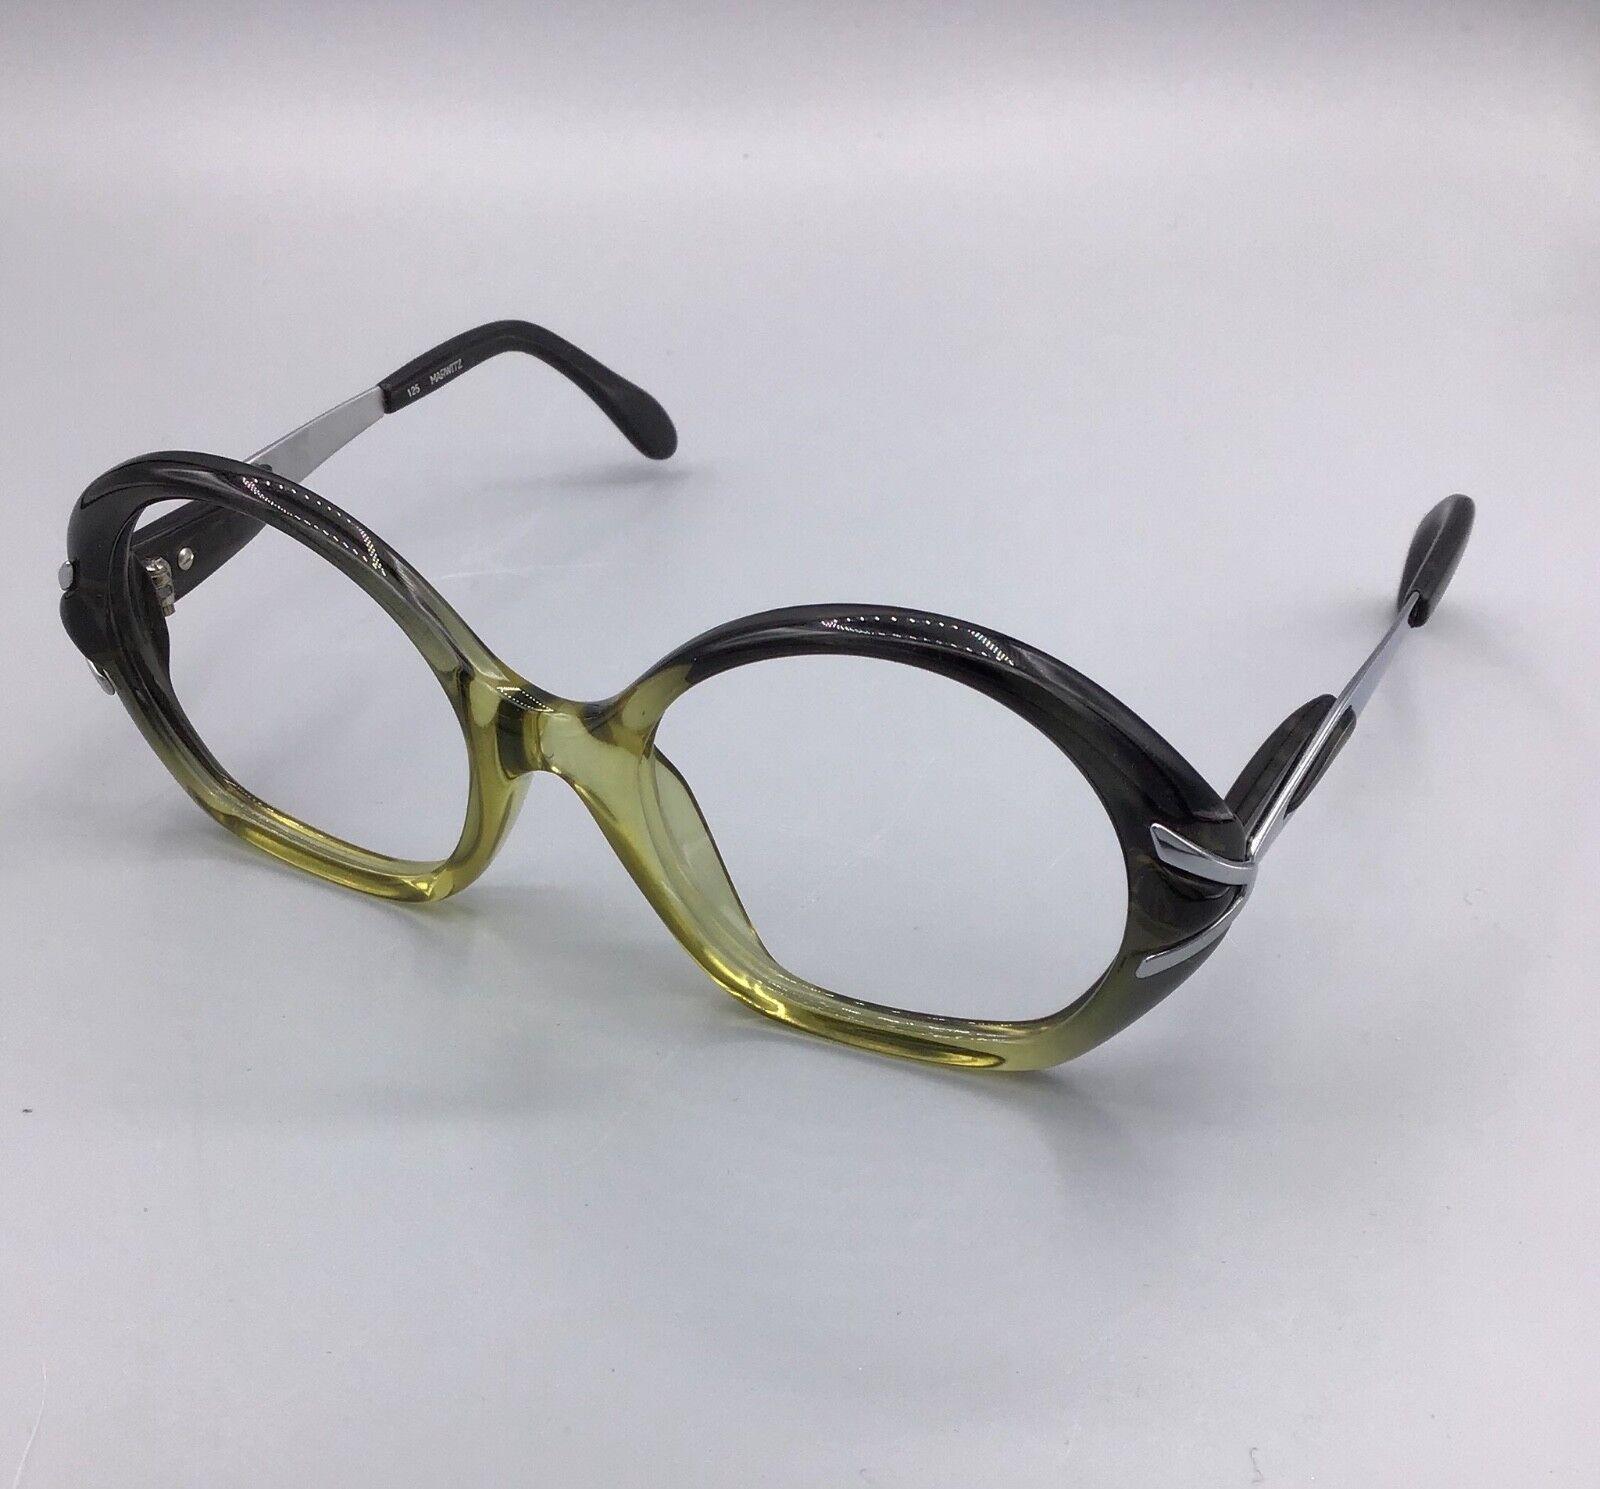 Marwitz occhiale vintage eyewear frame brillen lunettes gafas model 3028 339 AE4